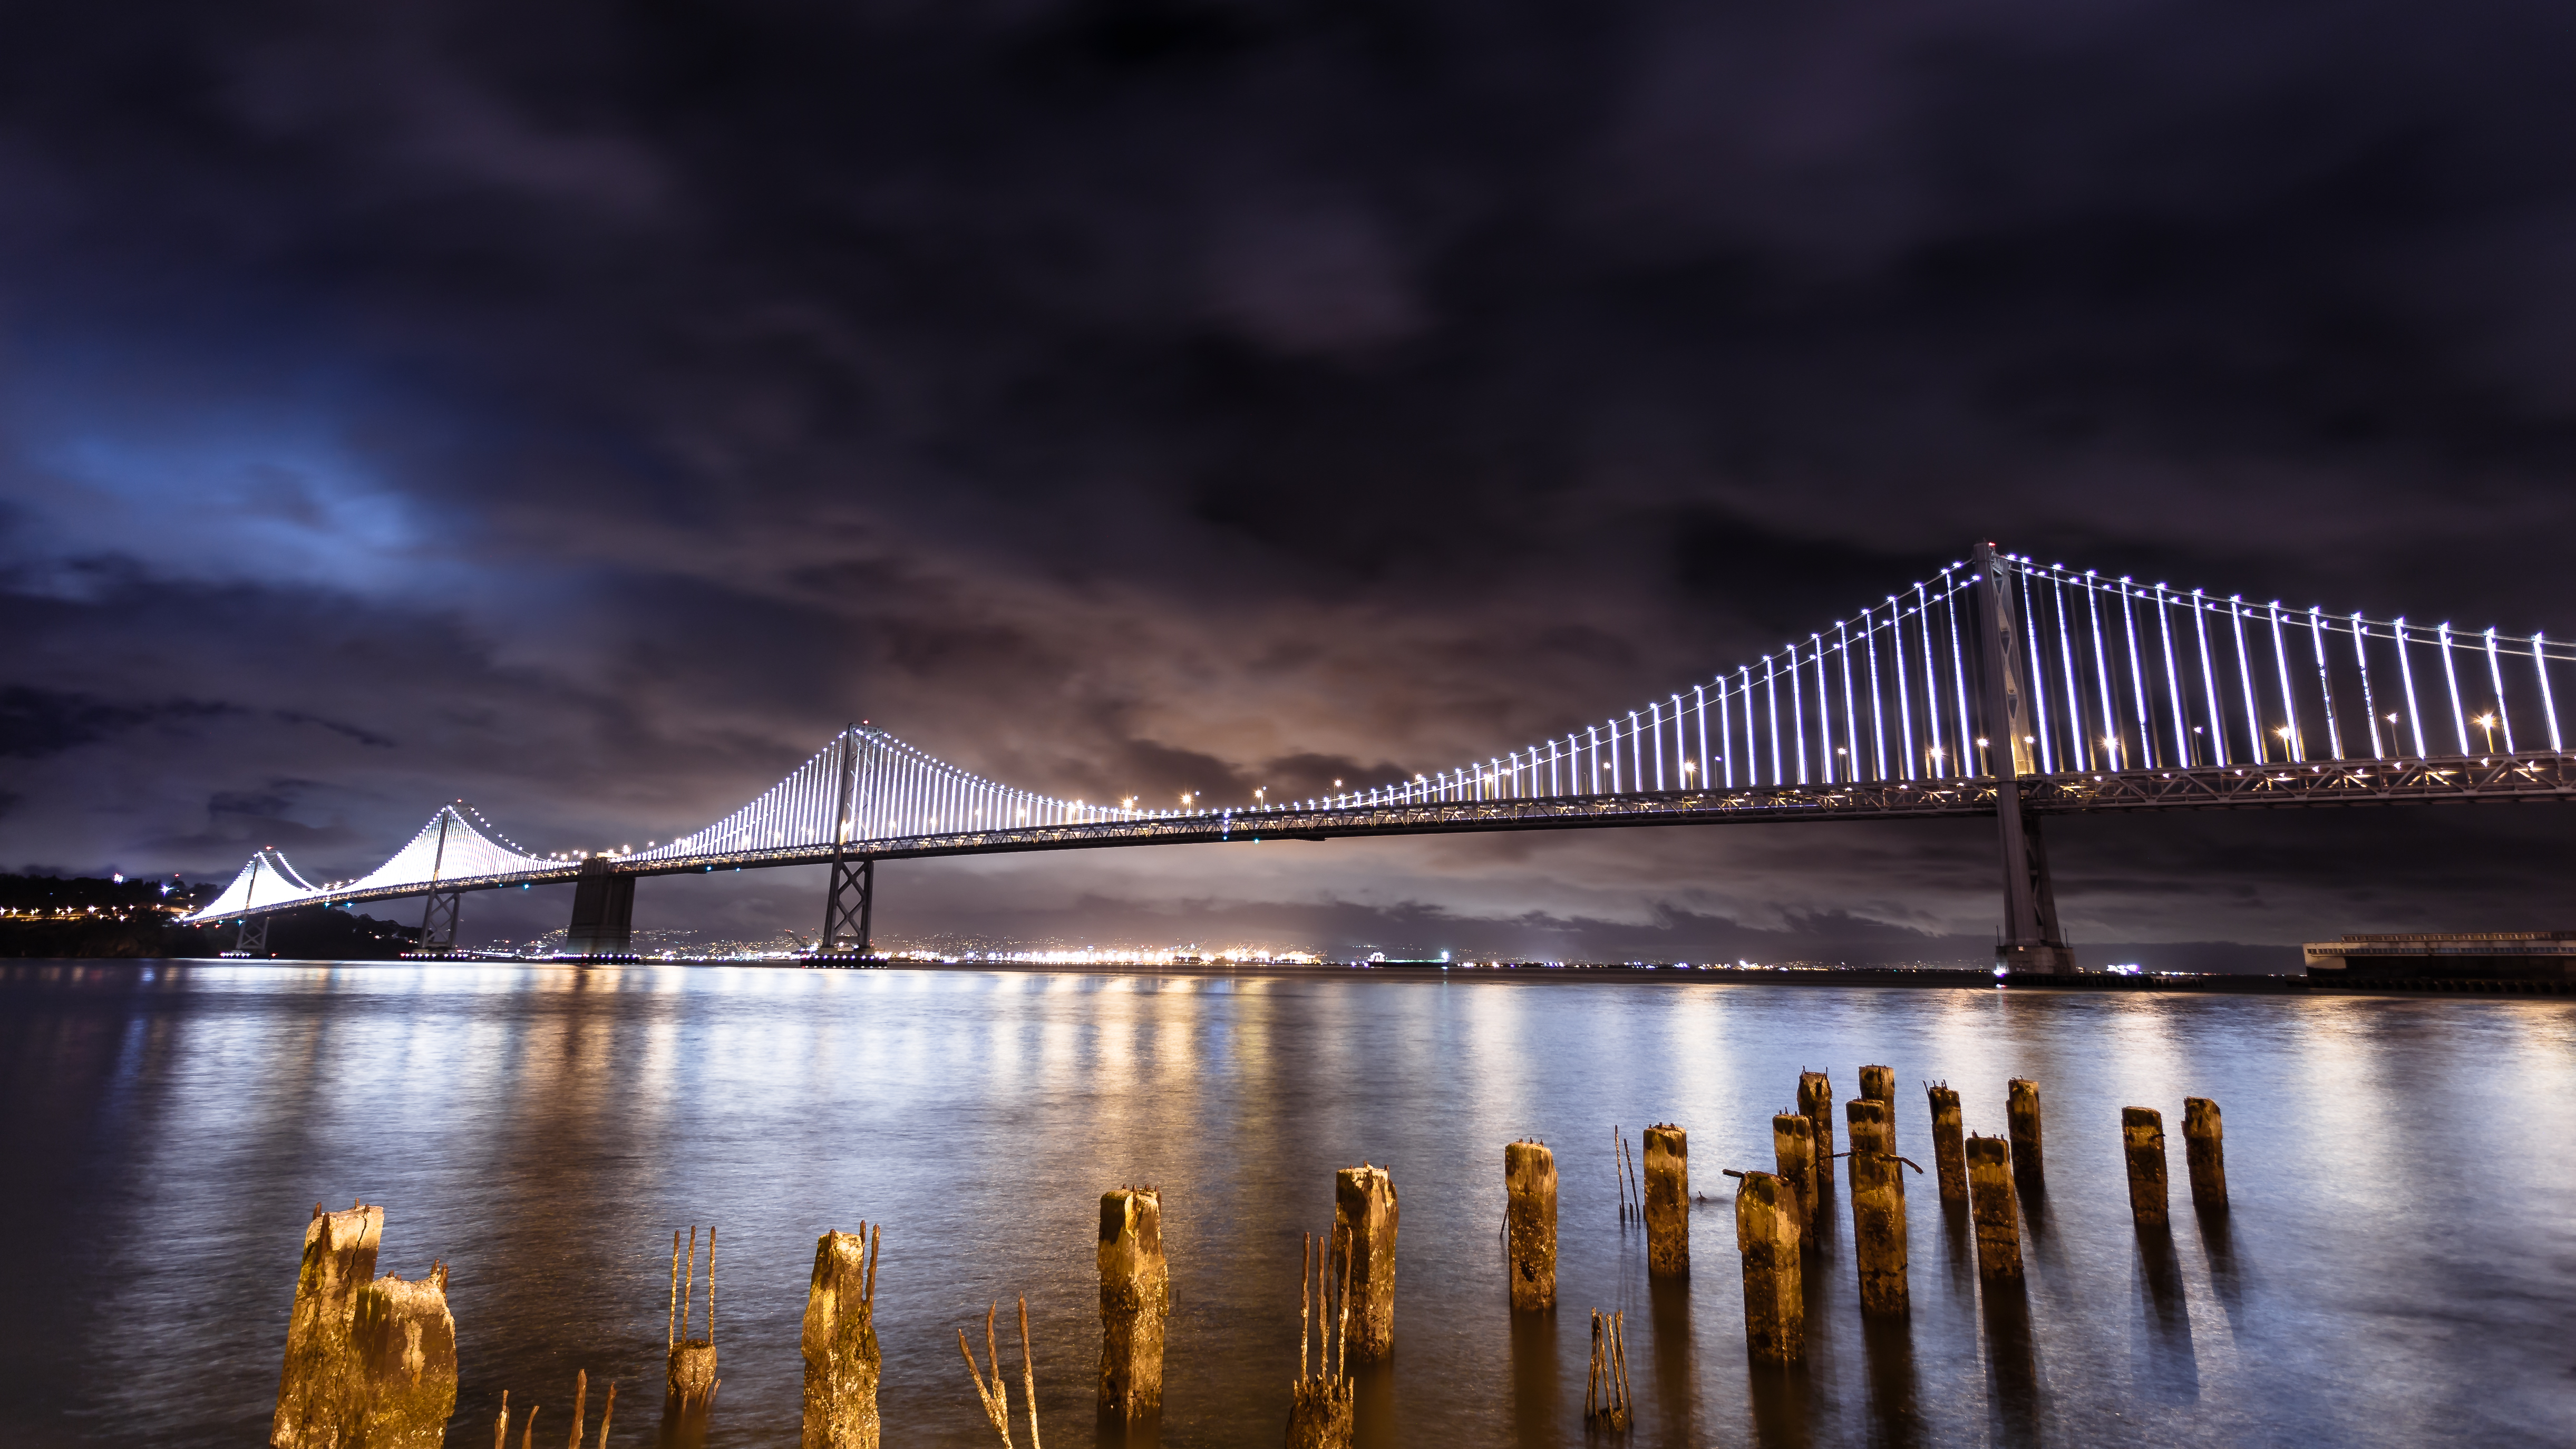 San Francisco-Oakland Bay Bridge illuminated at night.